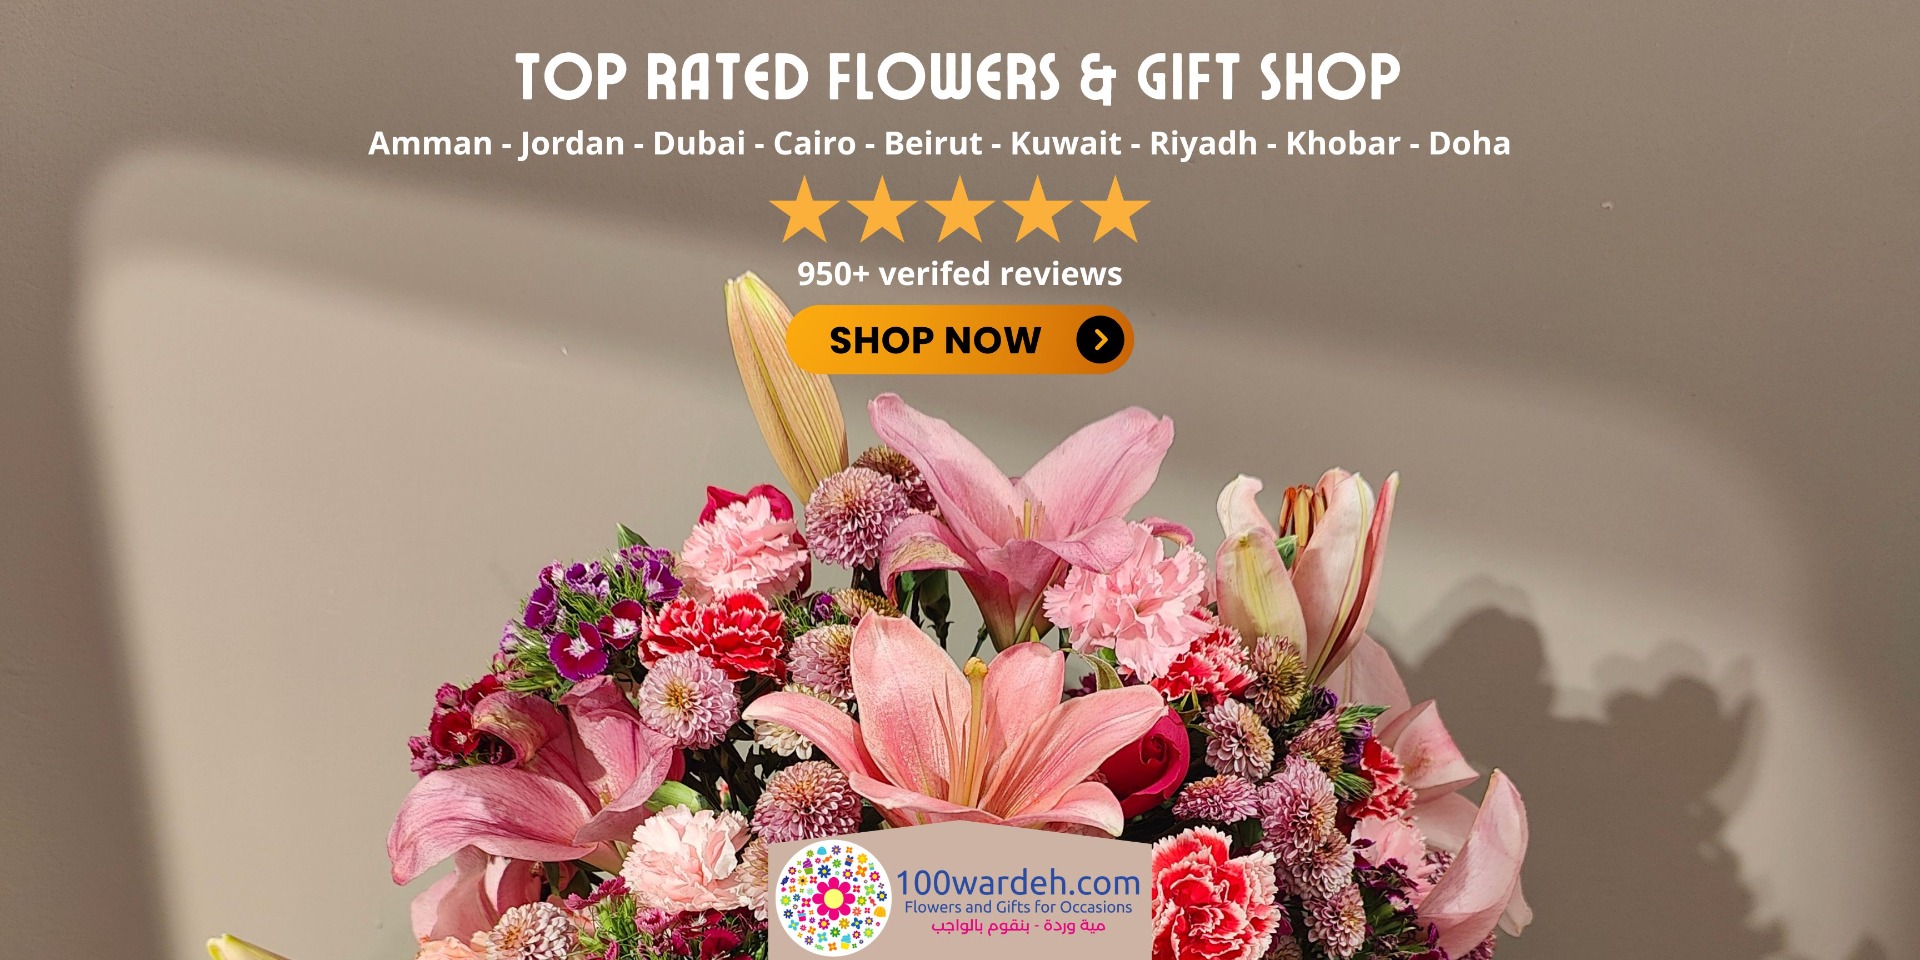 Send Flowers and gifts delivery riyadh saudi arabia